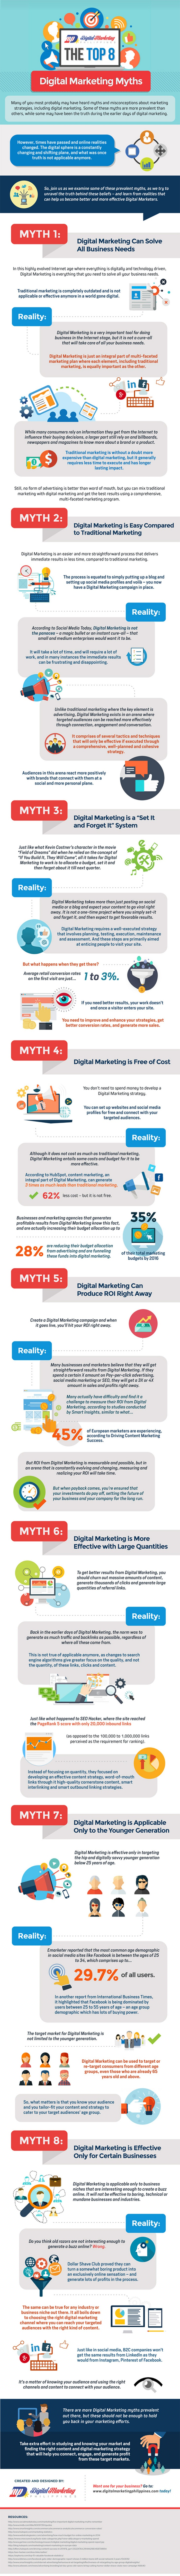 digital marketing myths infographic